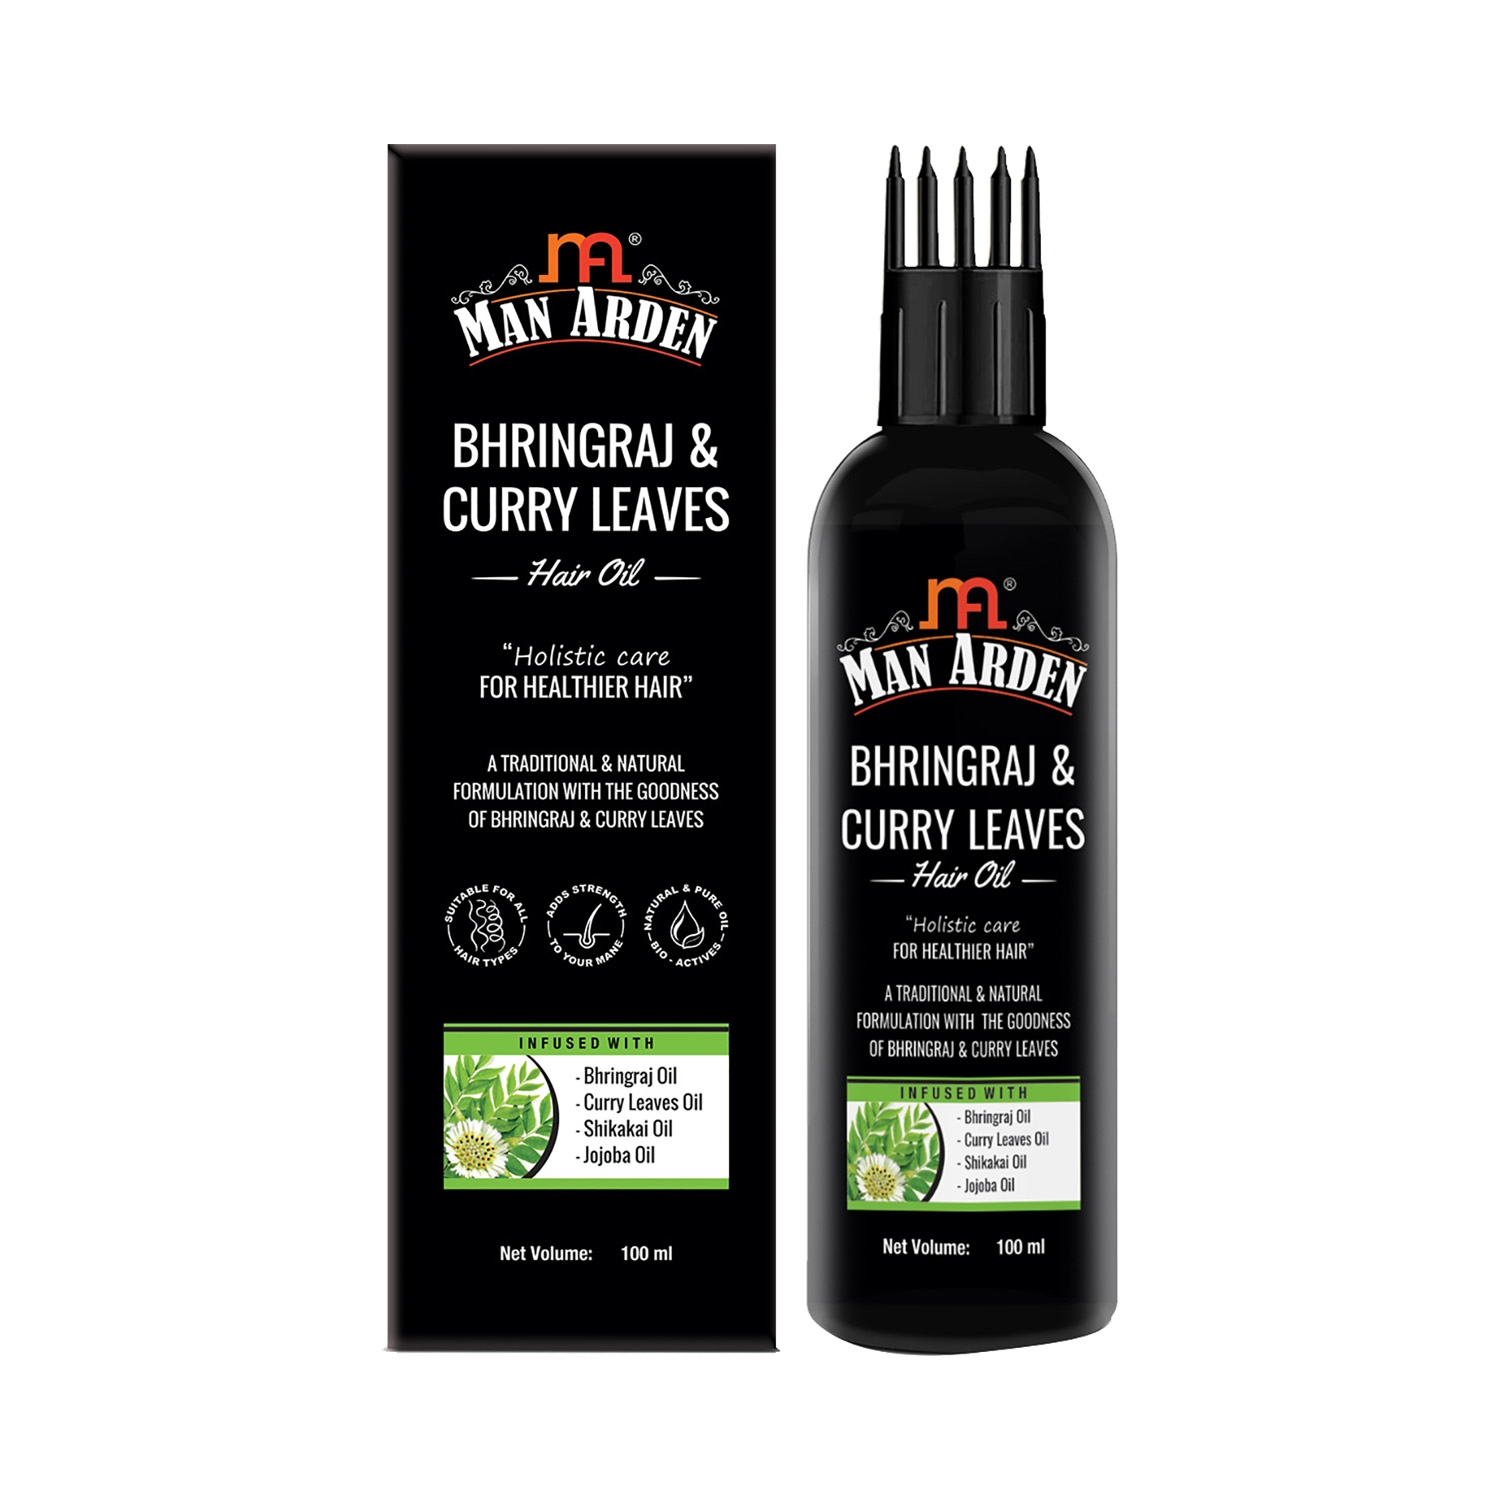 Man Arden | Man Arden Bhringraj & Curry Leaves Hair Oil For Hair Strength With Shikakai Oil & Jojoba Oil (100ml)